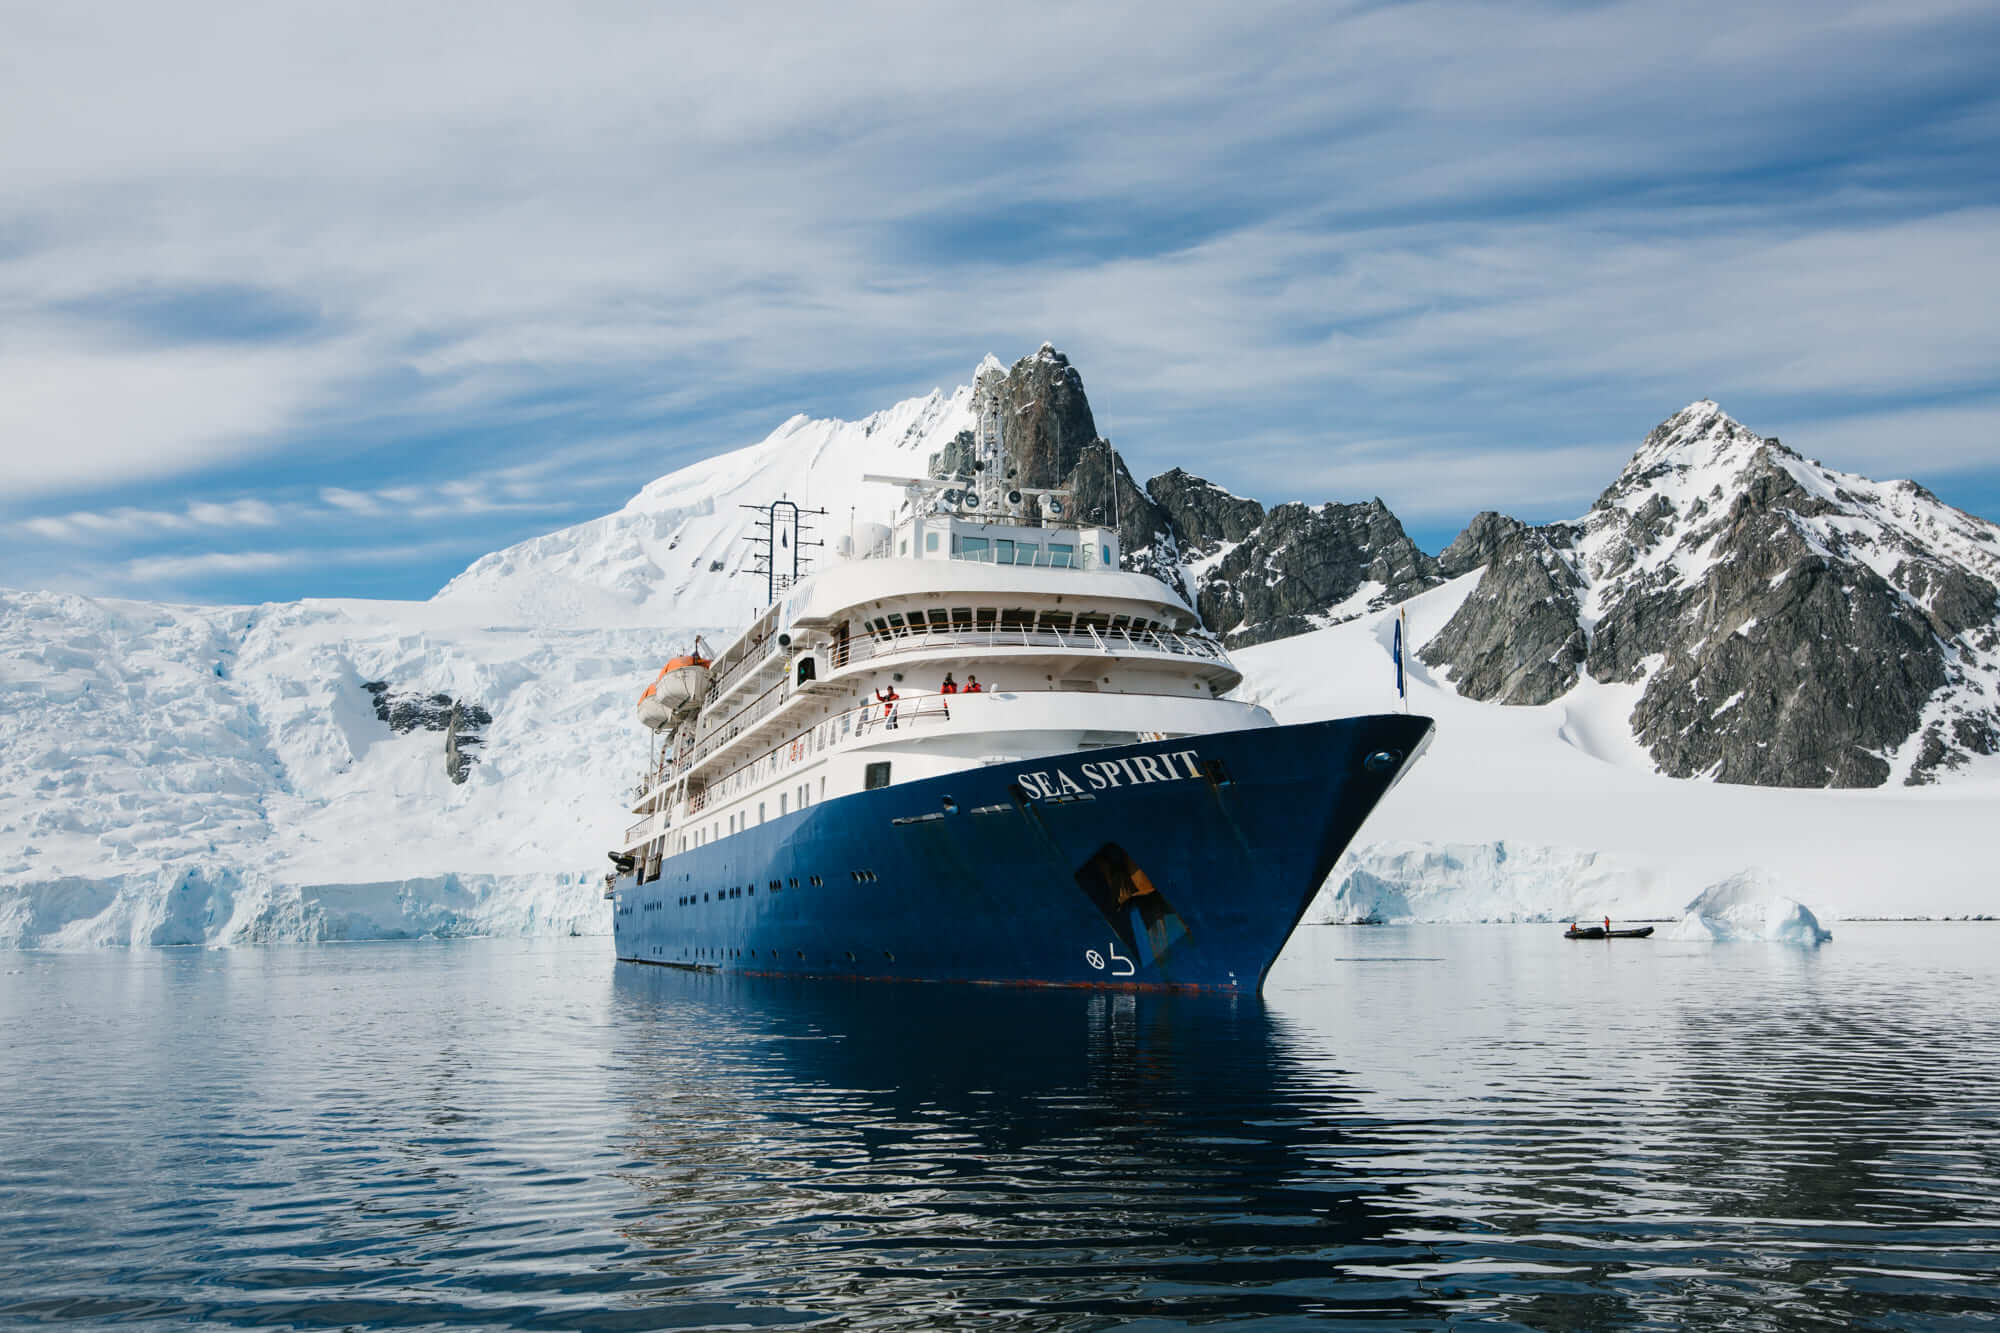 Sea Spirit Expedition Cruise in the Arctic